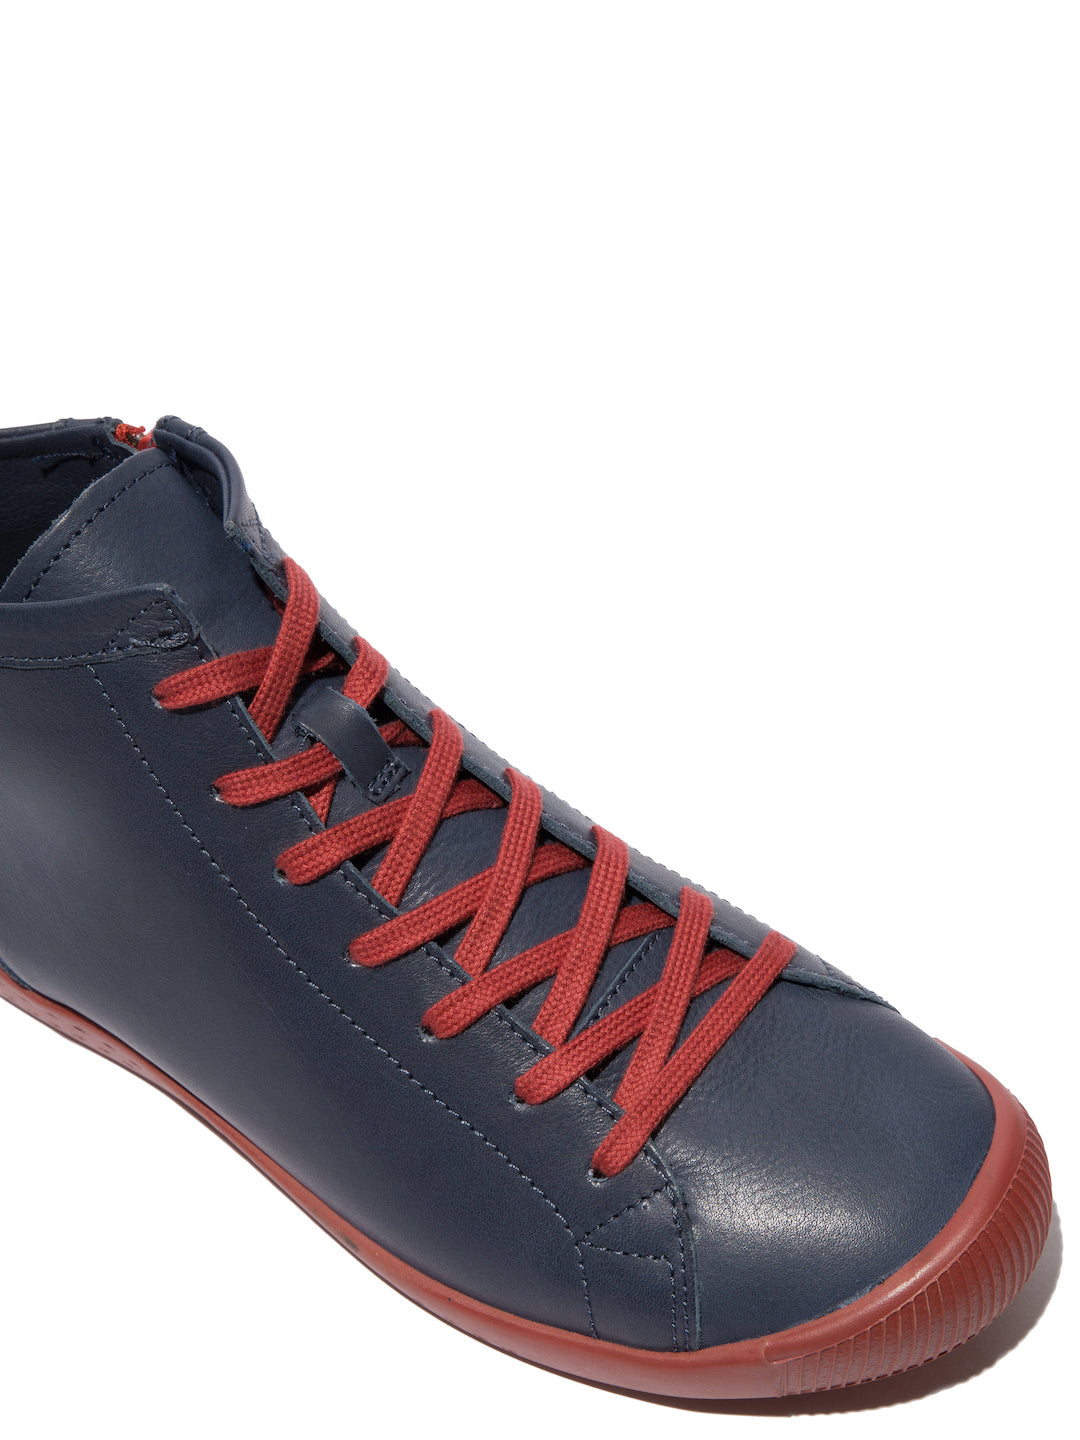 Softinos Ibbi 653 Ladies Navy Leather Zip & Lace Shoe Boots